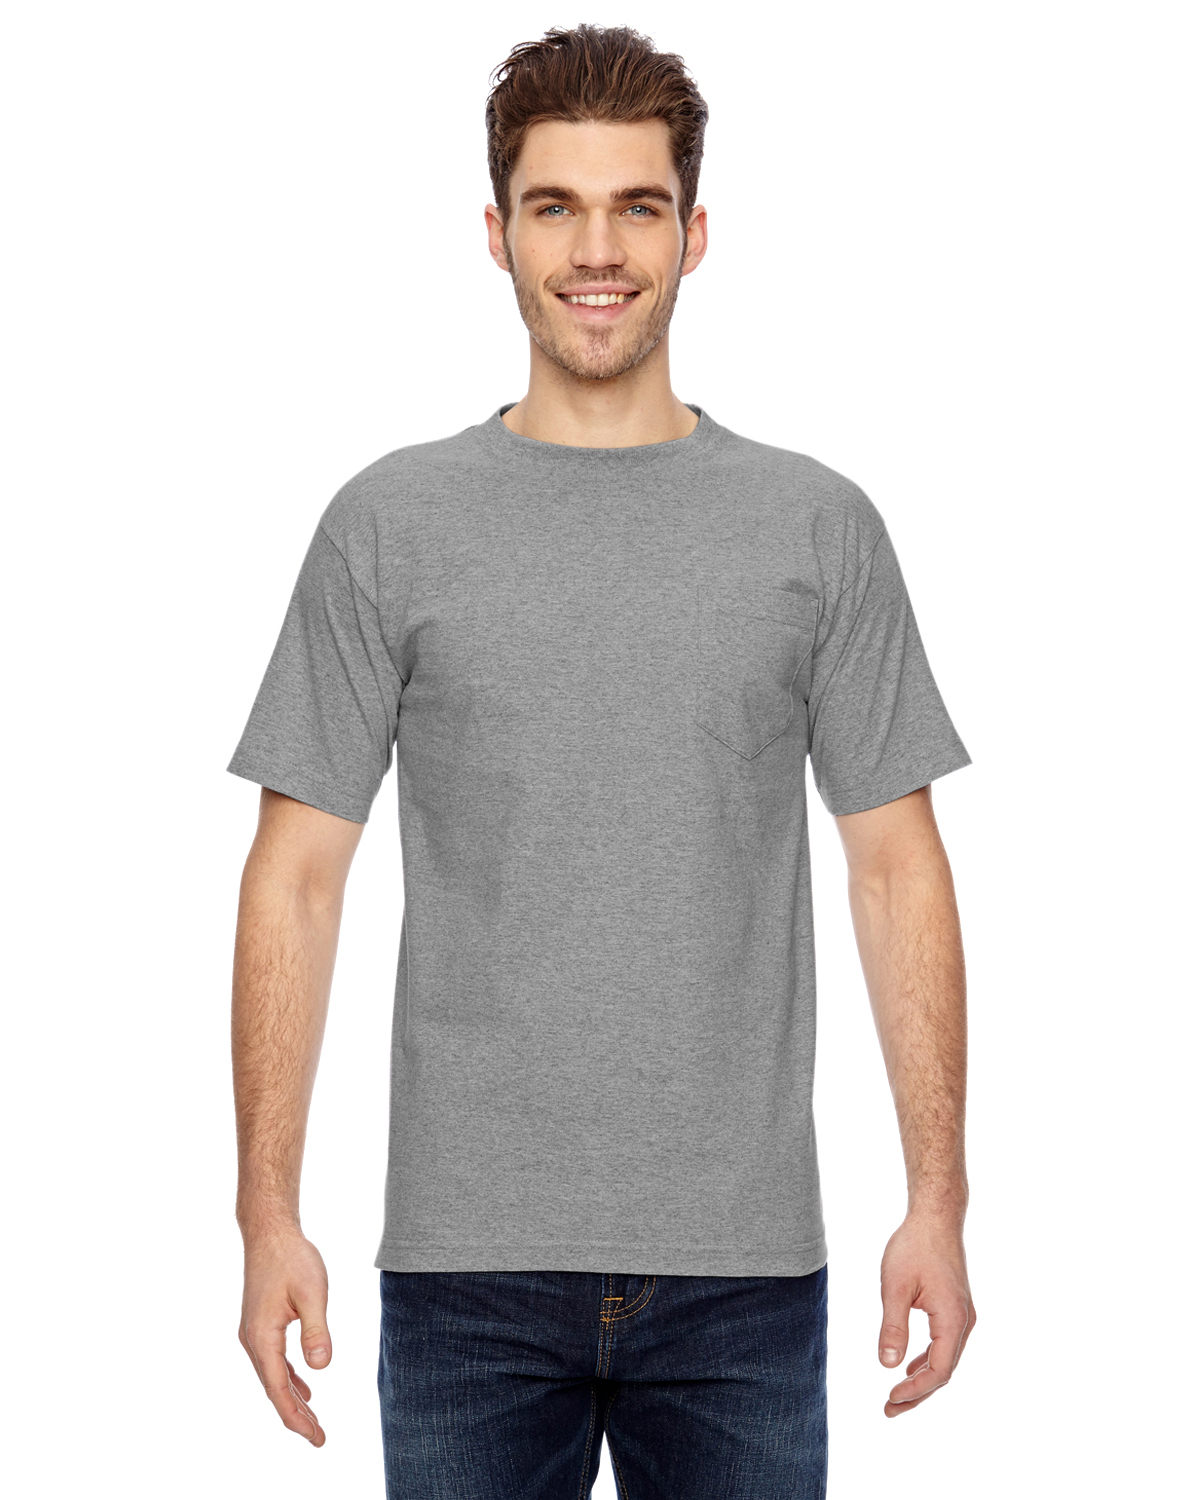 Bayside 6.1 oz Basic Pocket T-Shirt 